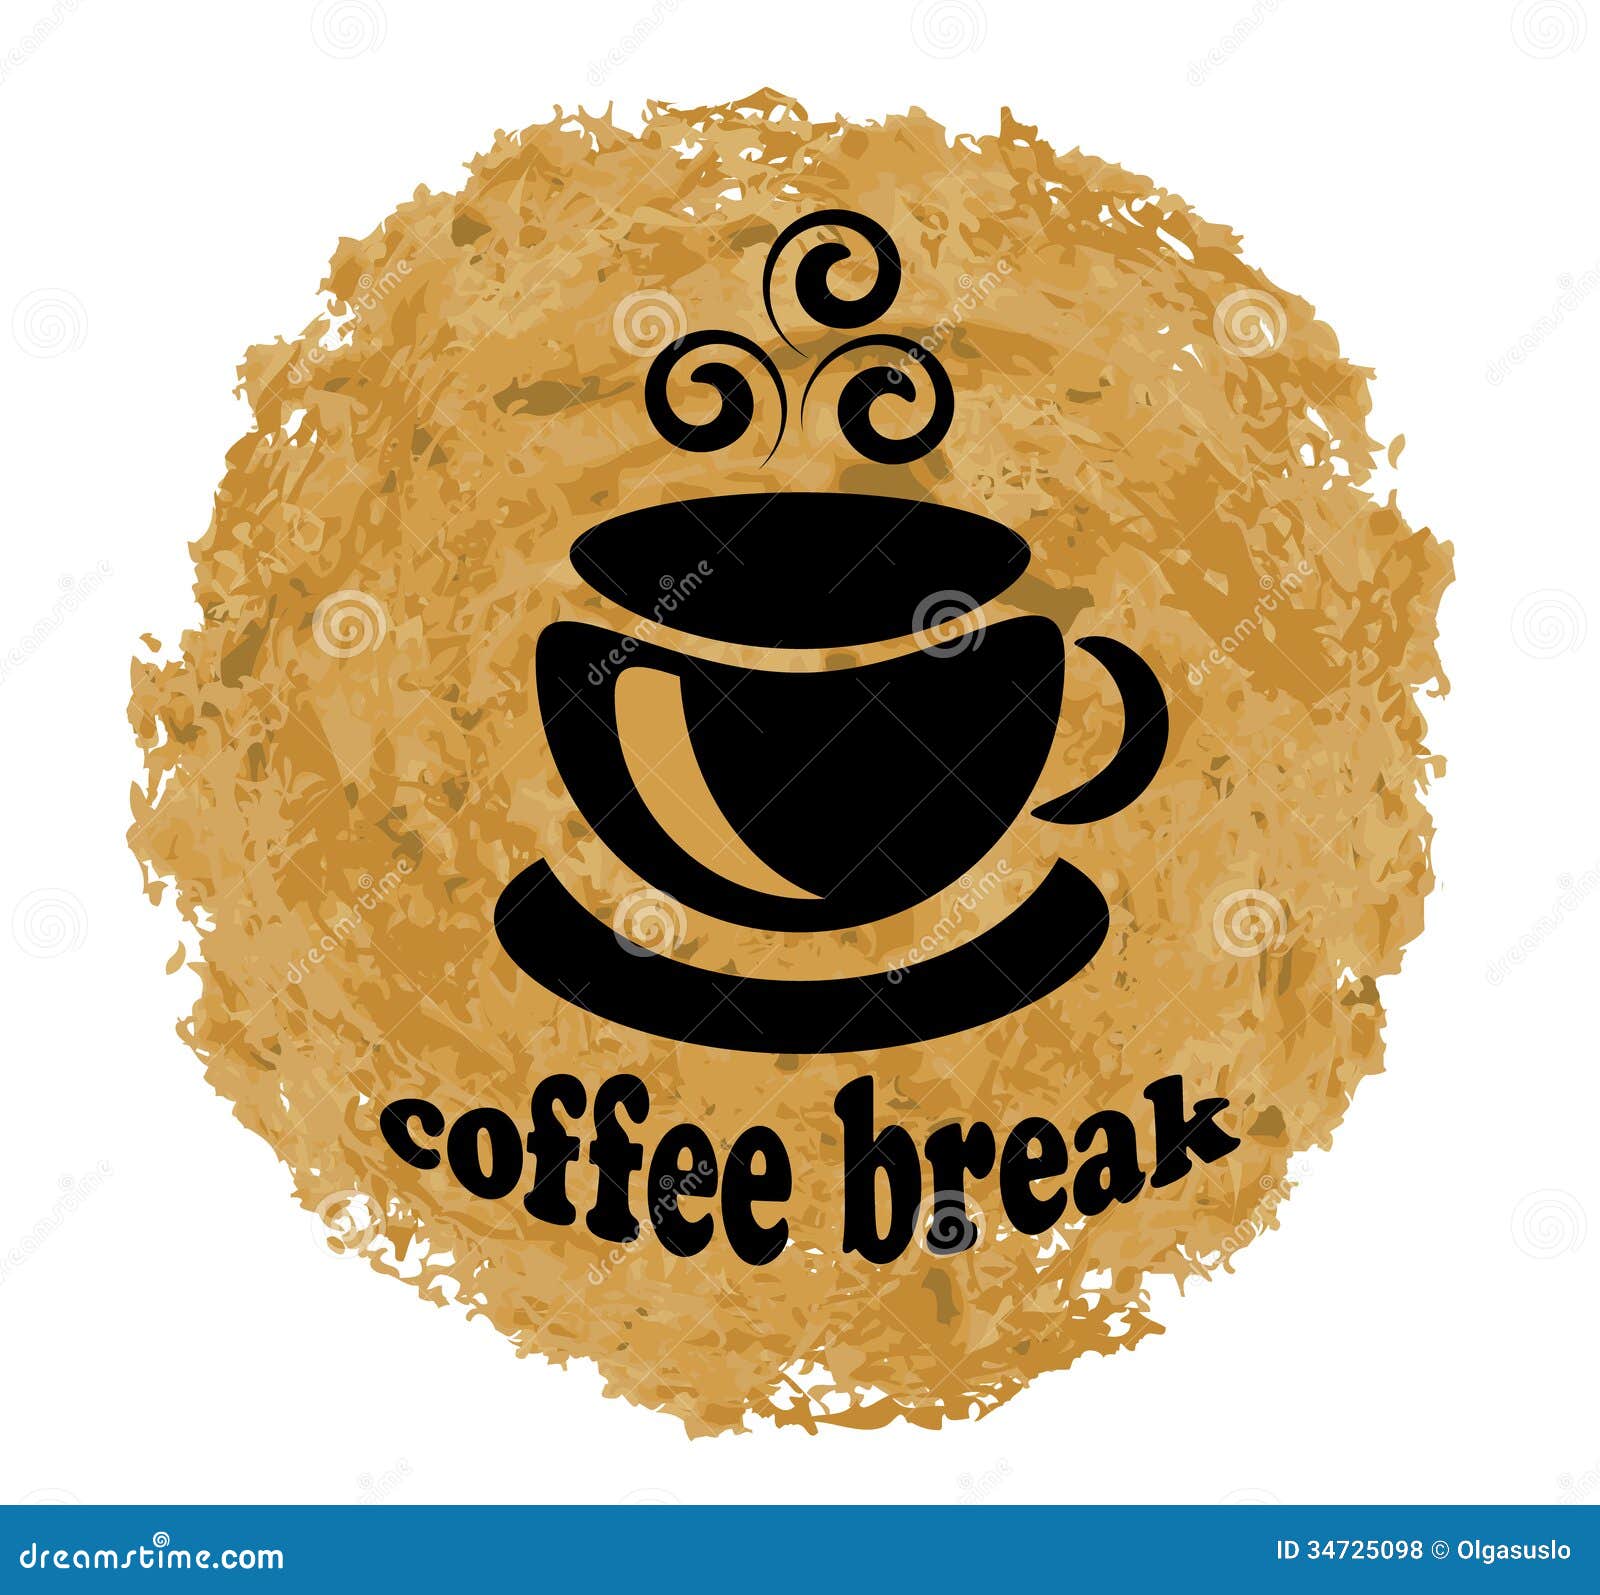 clipart coffee break - photo #24